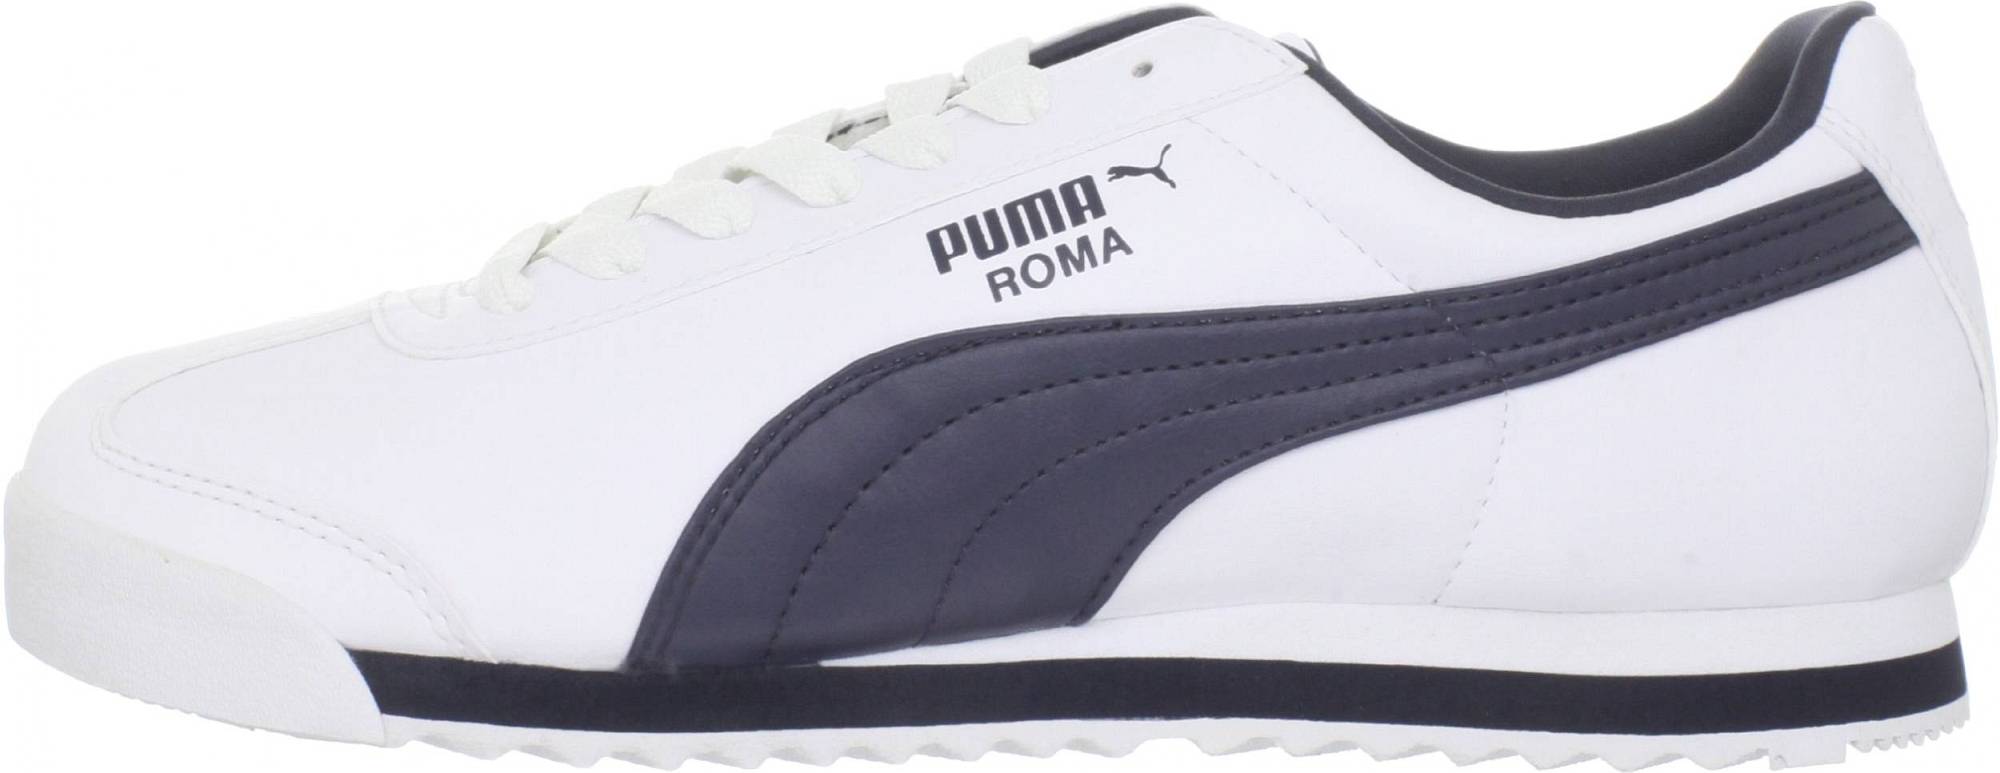 Puma Roma – Shoes Reviews & Reasons To Buy